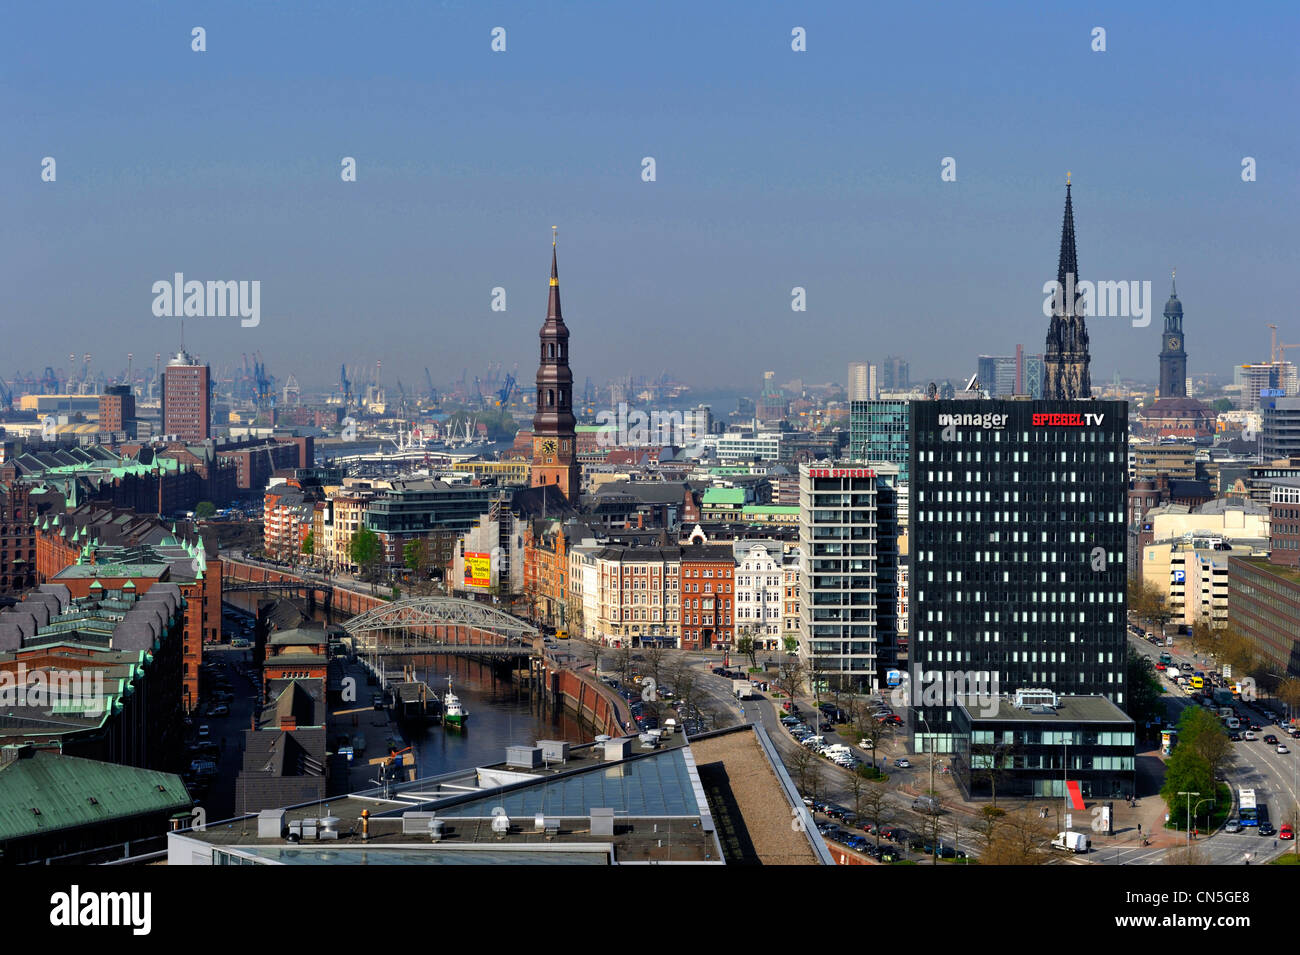 Allemagne, Hambourg, capitale verte européenne 2011, sommaire Banque D'Images